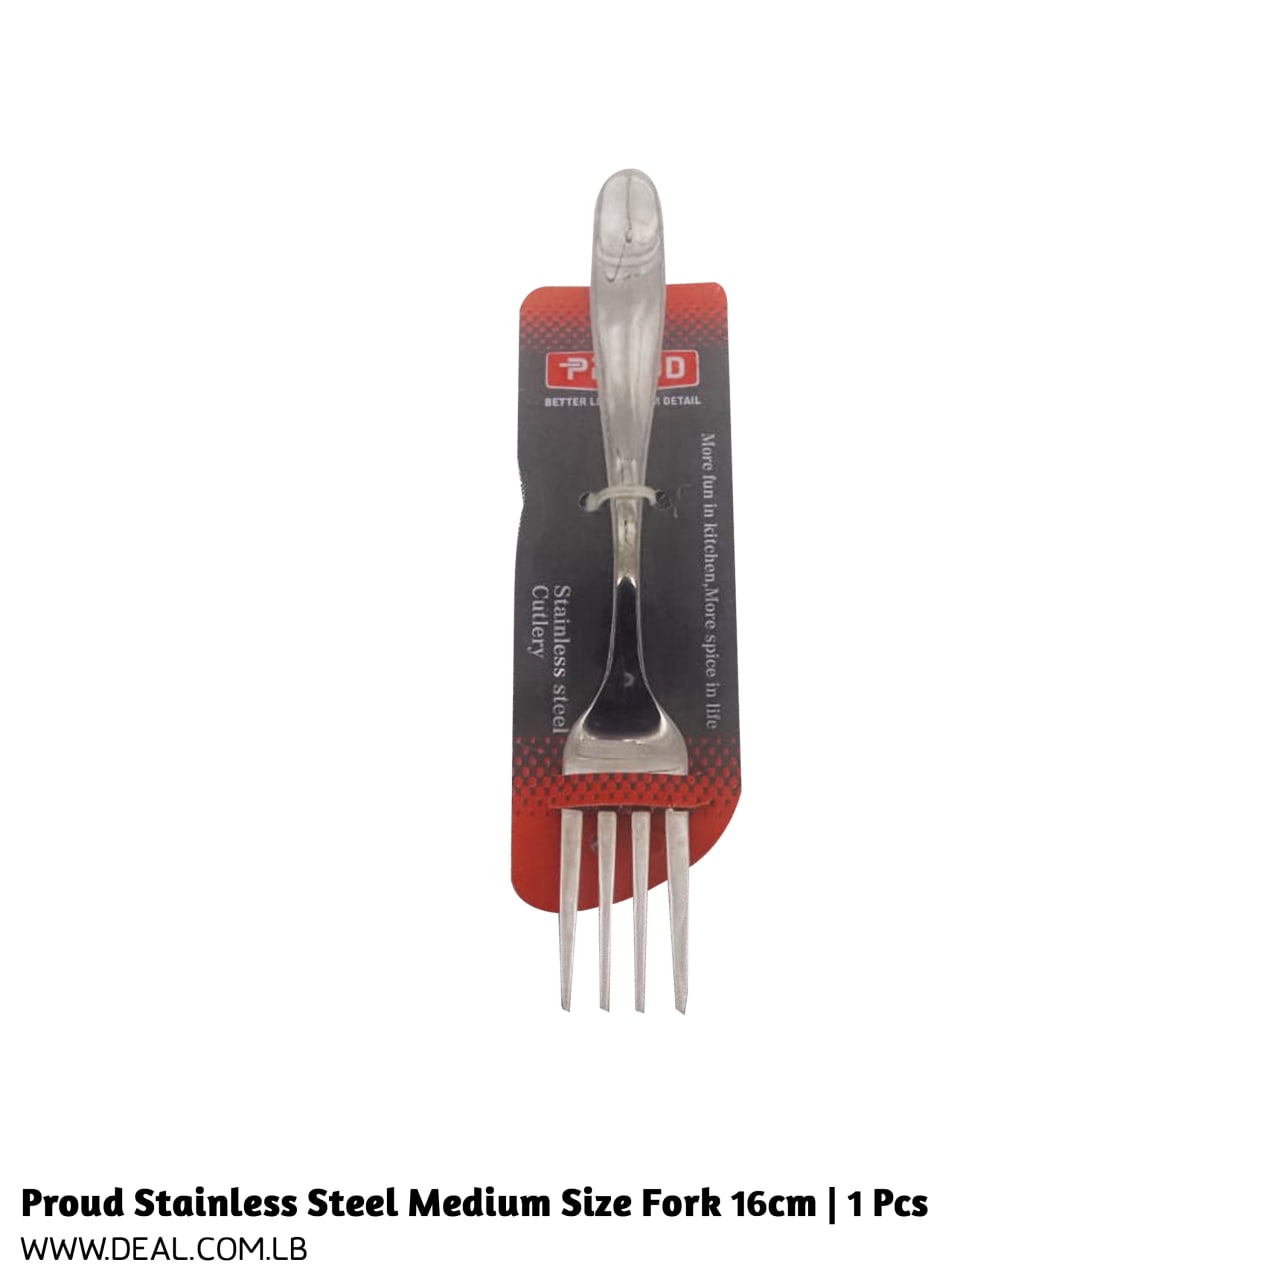 Proud Stainless Steel Medium Size Fork 16cm  1 Pcs